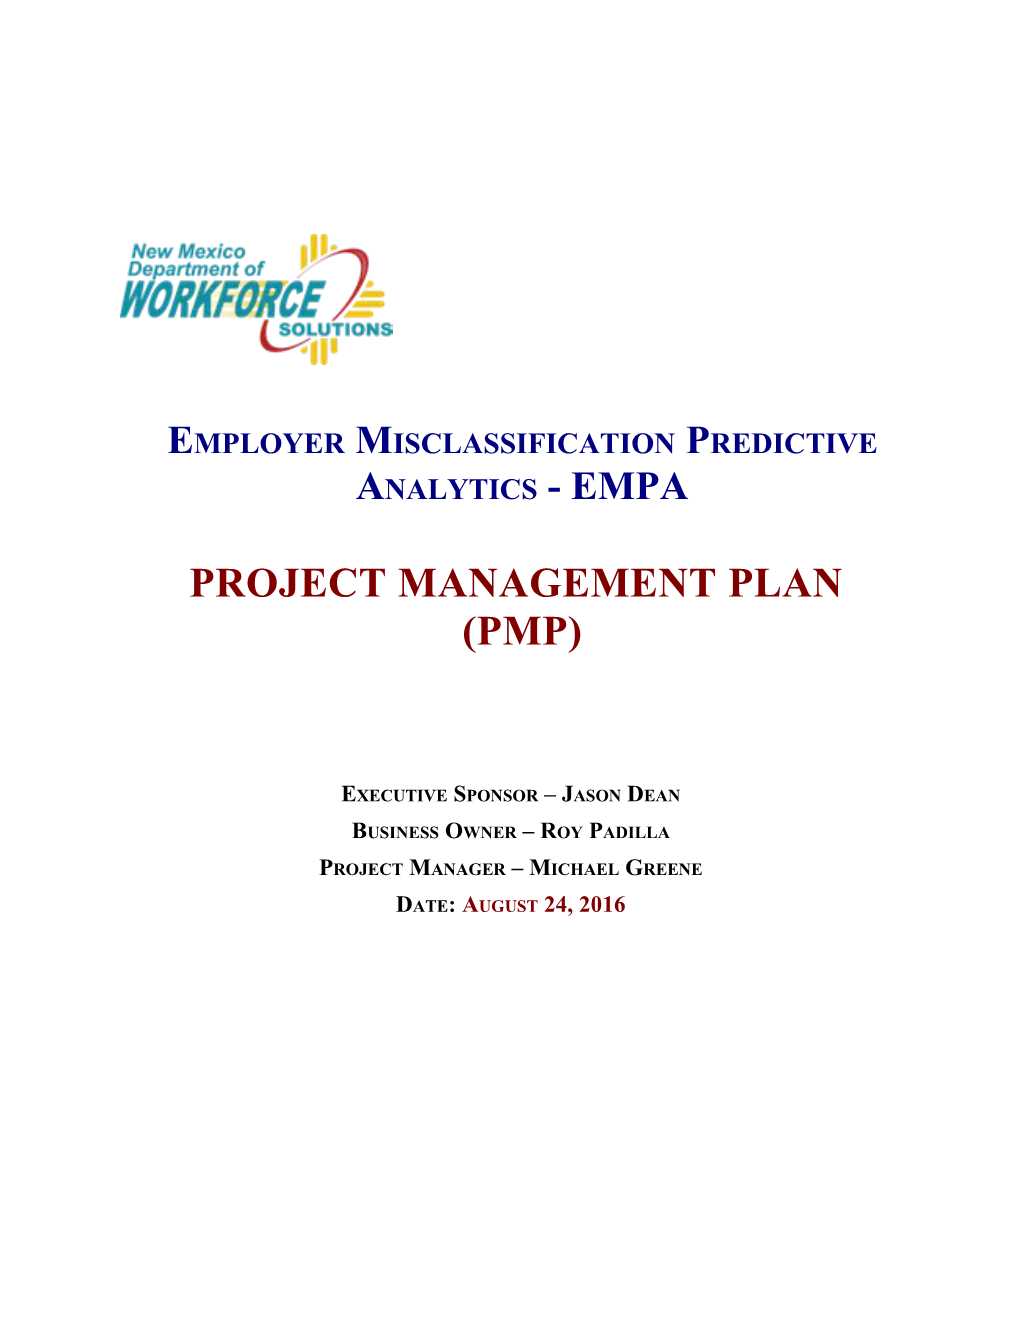 Employer Misclassification Predictive Analytics - EMPA